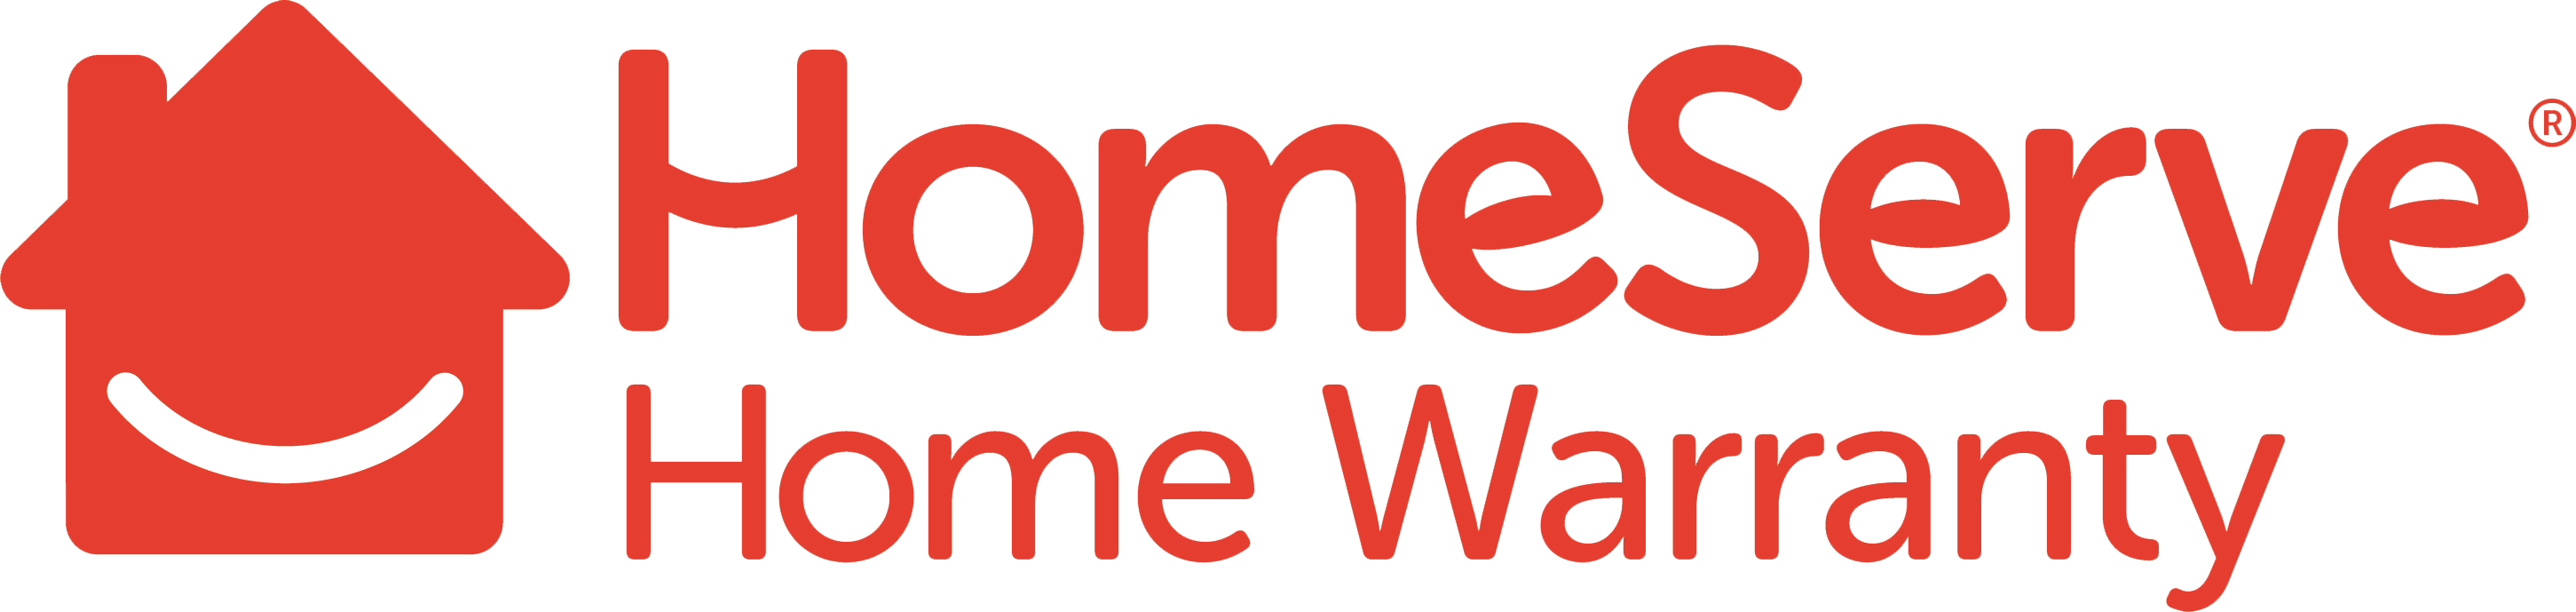 Homeserve Home Warranty